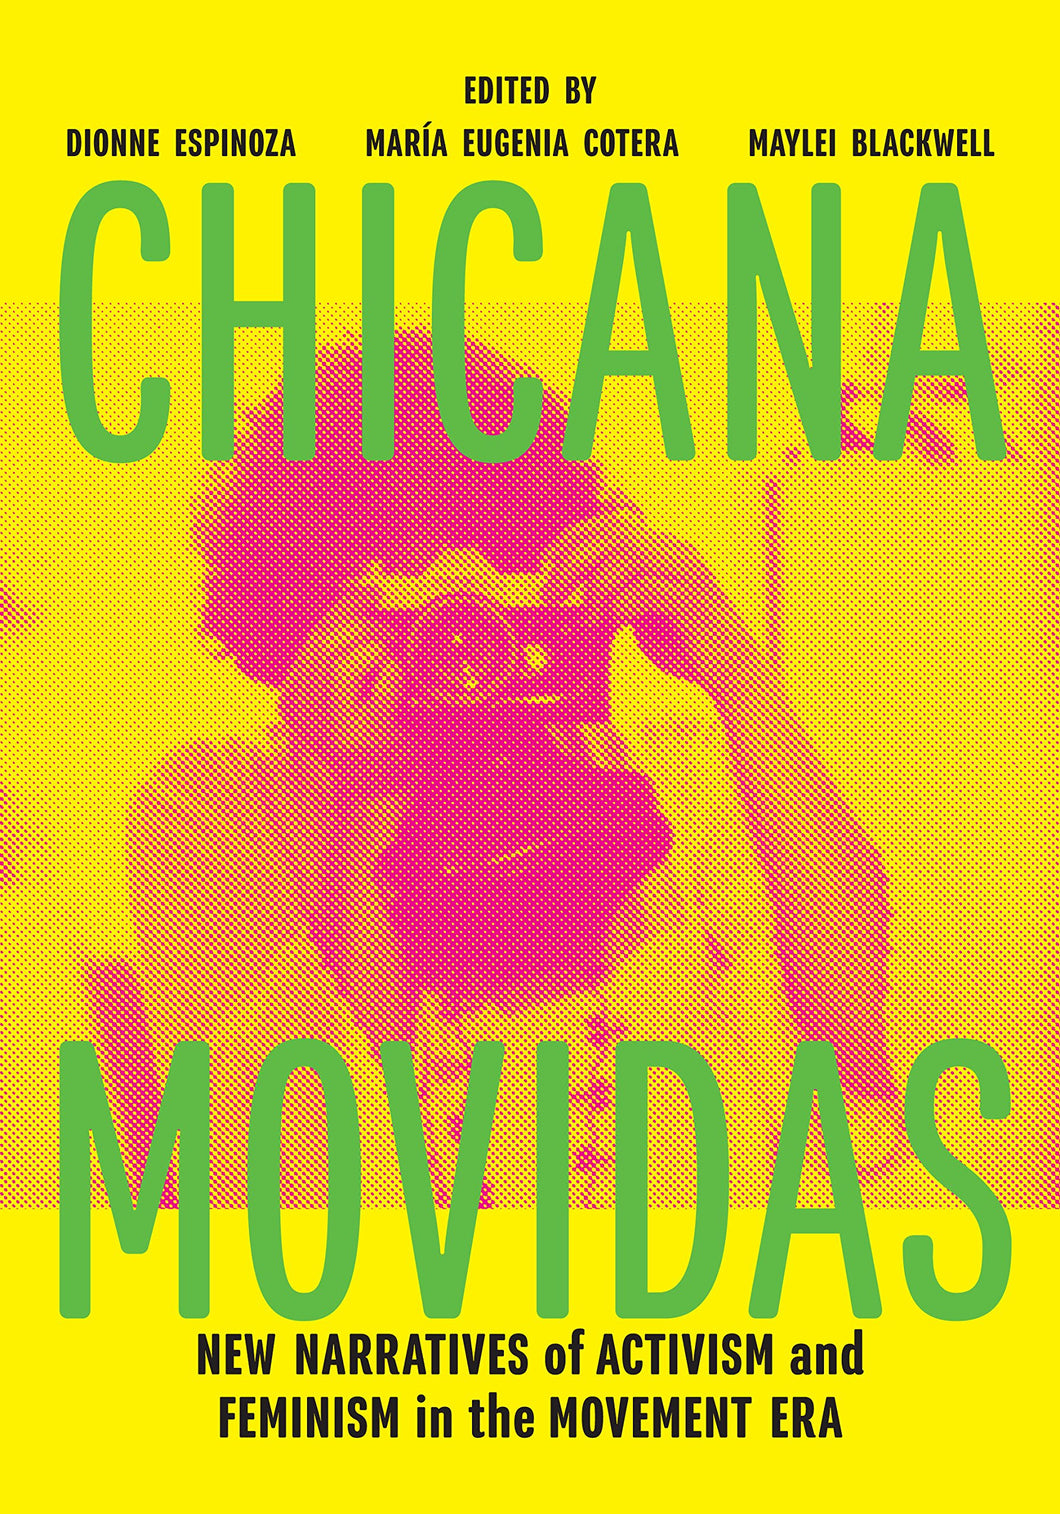 Chicana Movidas: New Narratives of Activism and Feminism in the Movement Era by Dionne Espinoza, María Eugenia Cotera, Maylei Blackwell